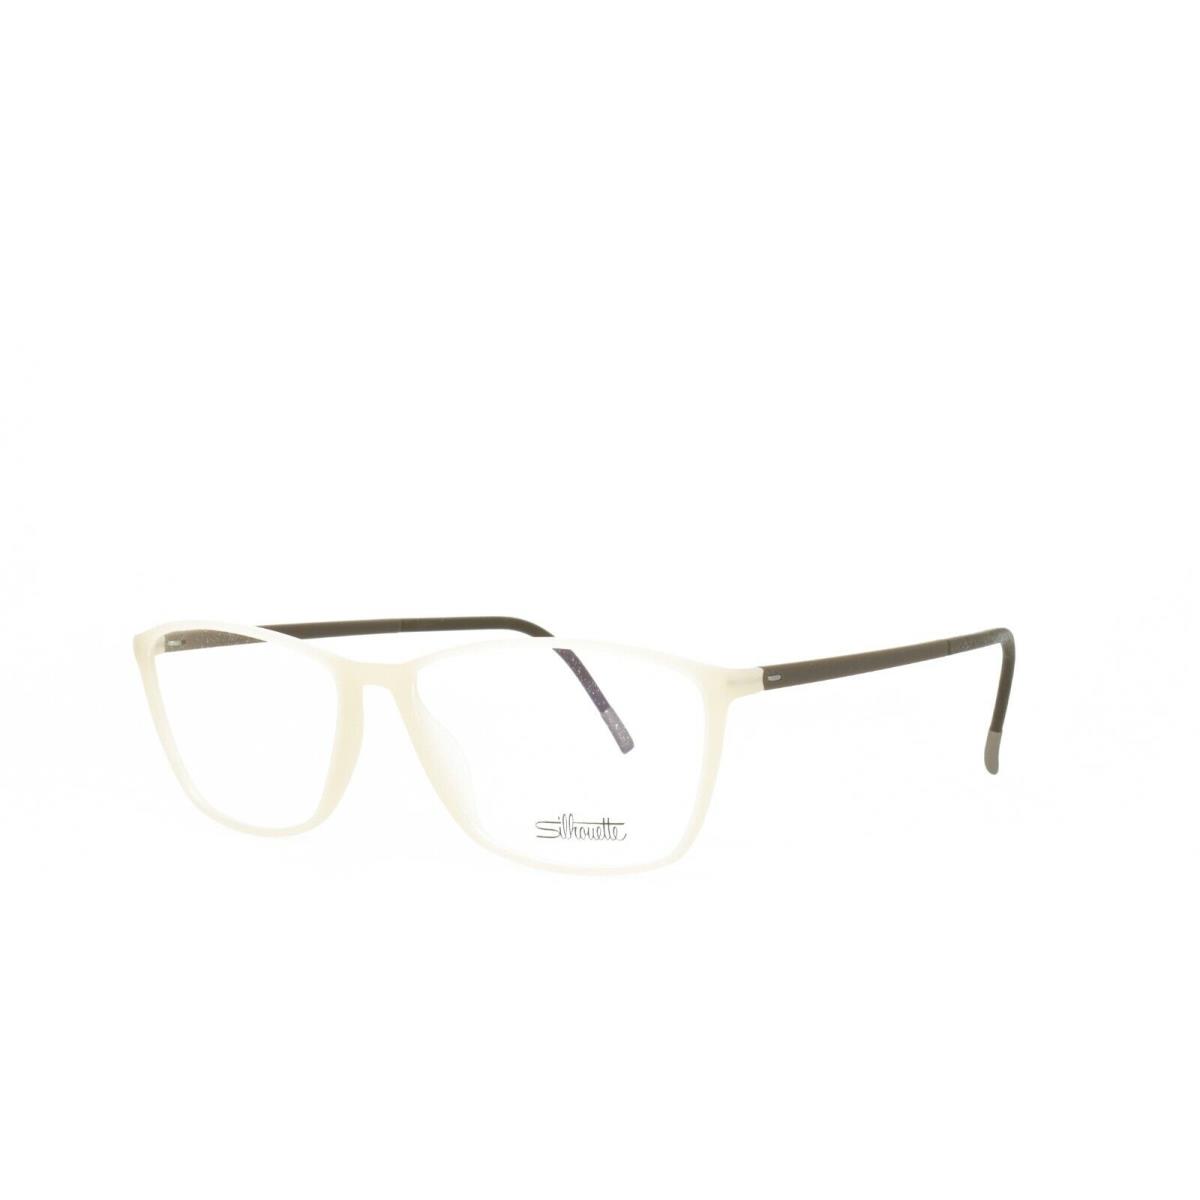 Silhouette Spx Illusion 1560 10 6106 Eyeglasses Frames 54-14-135 Ivory